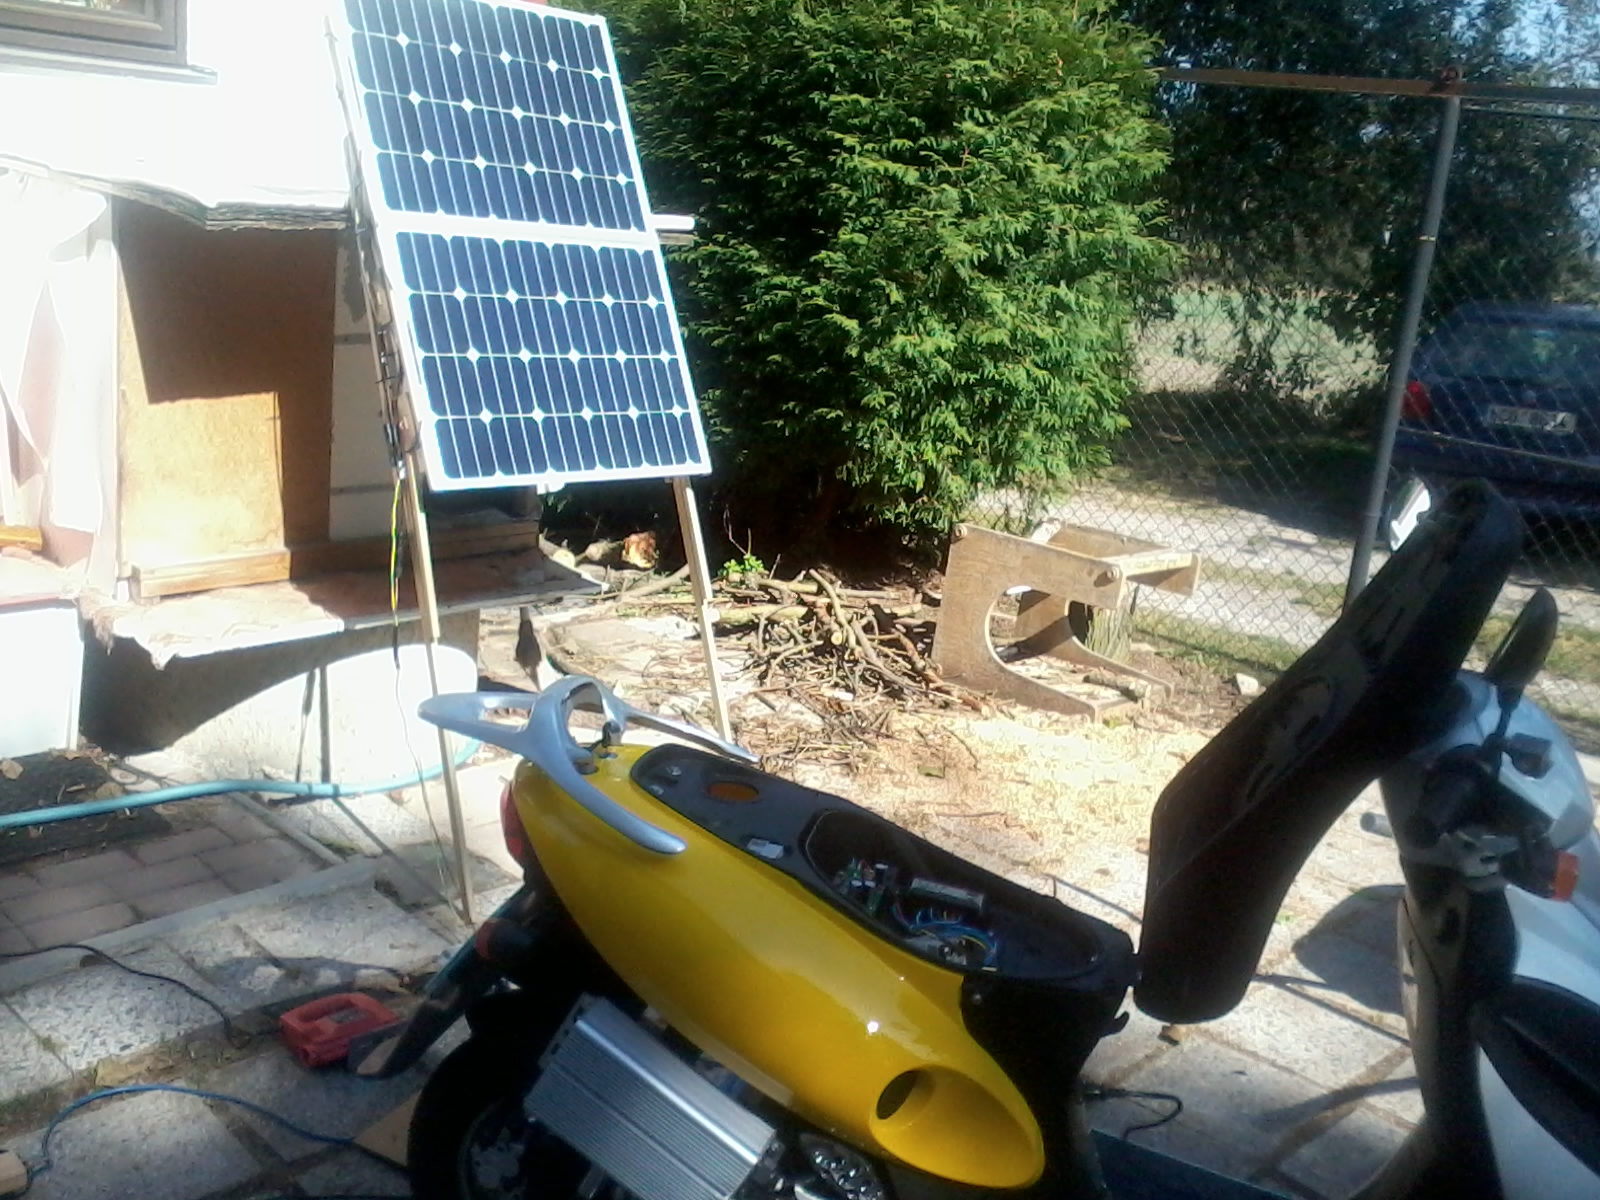 Solární elektroskútr.